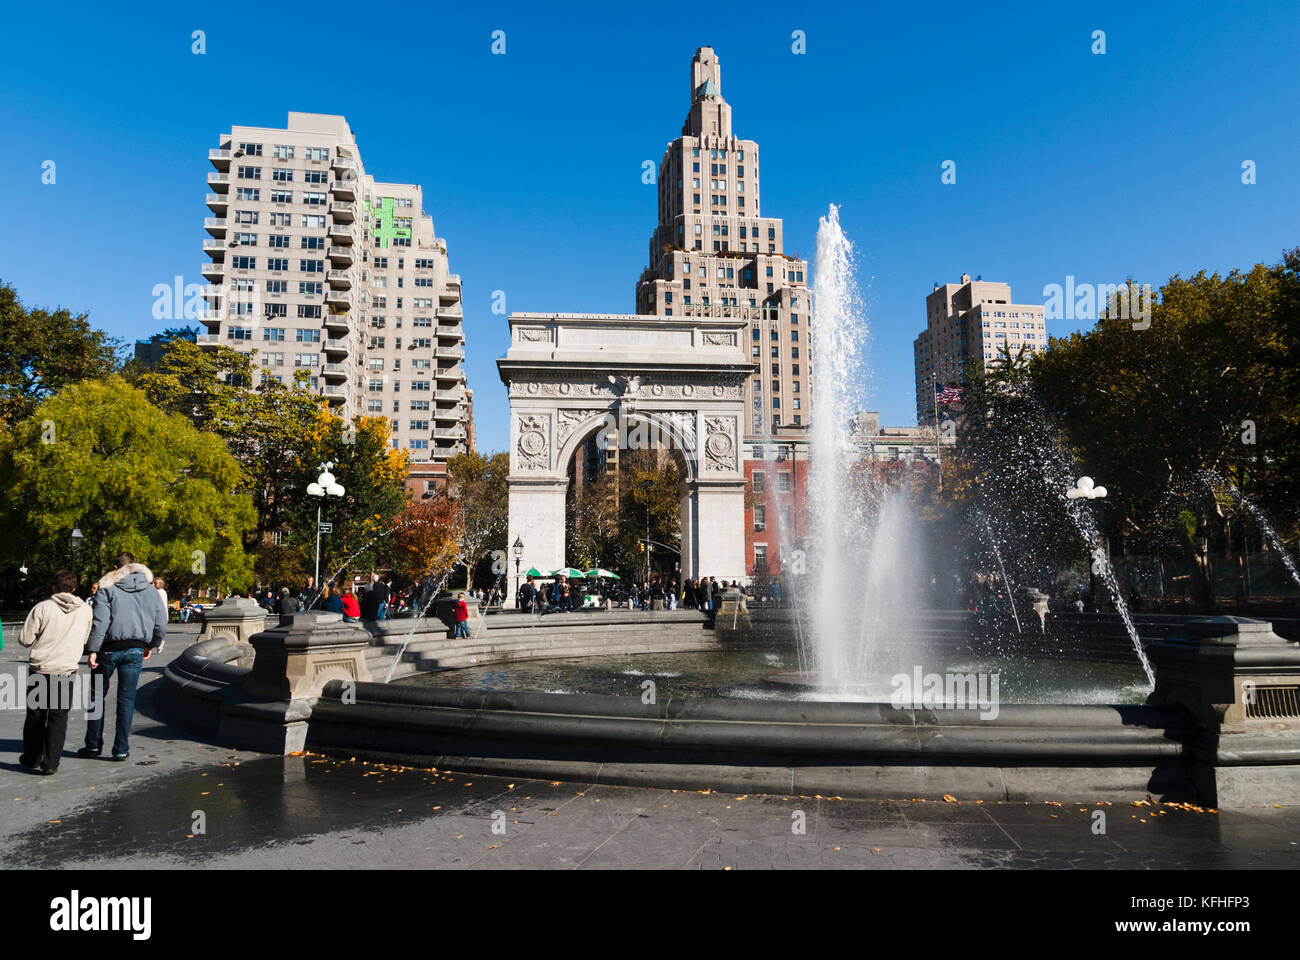 Washington Square Park, Greenwich Village, manhattan, New York City, NY, USA Banque D'Images